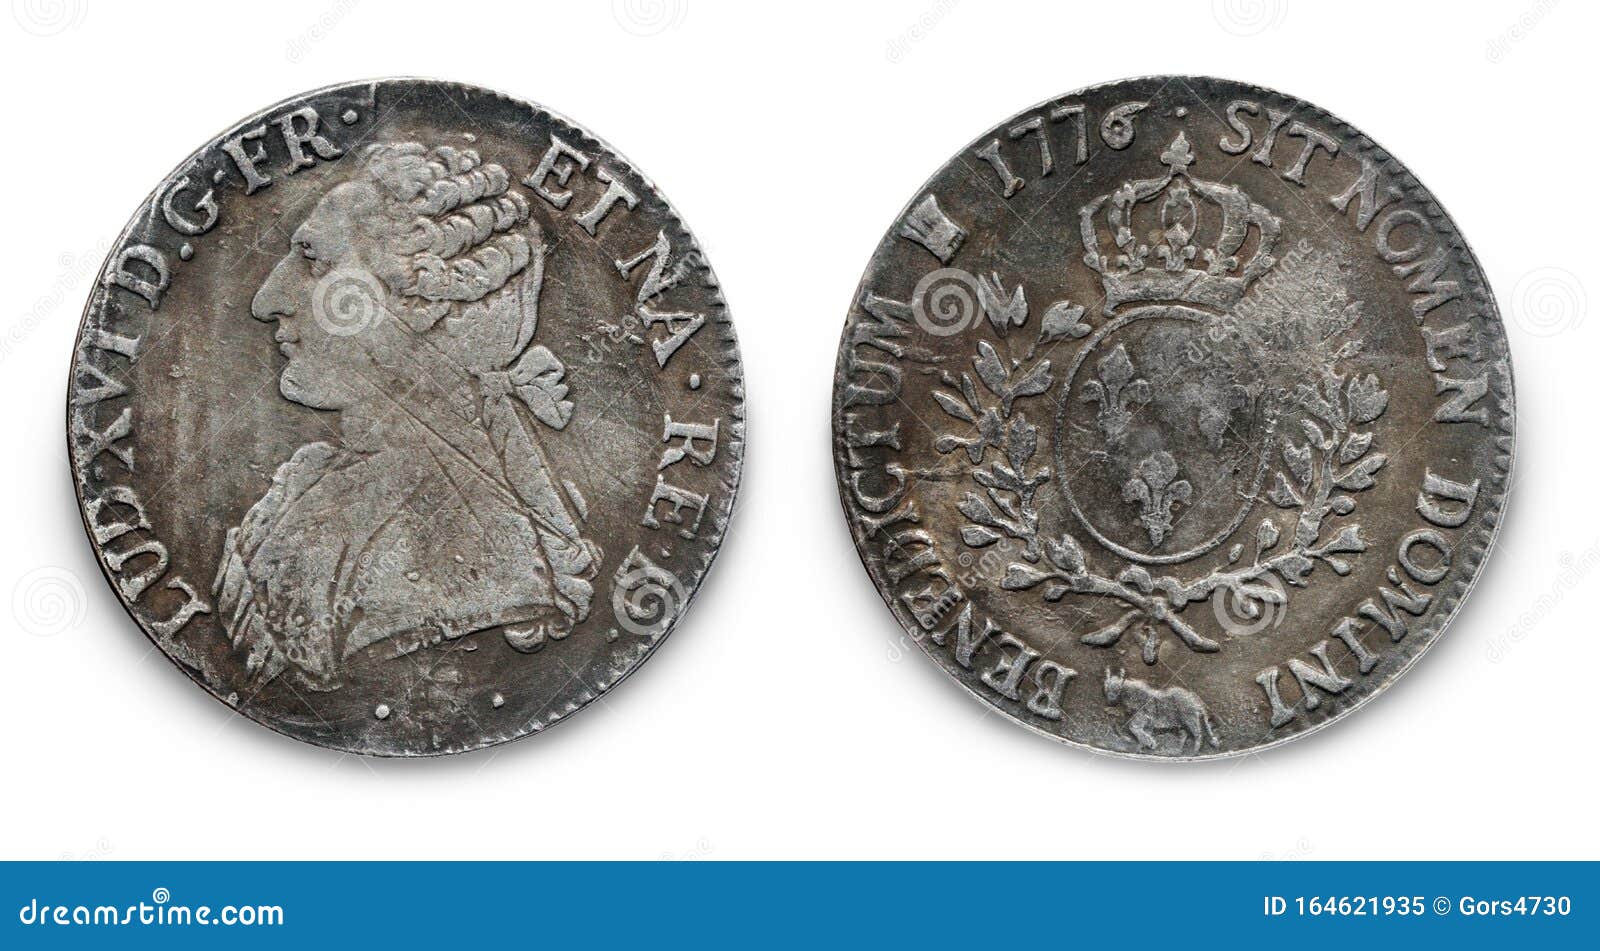 silver coin of louis xvi